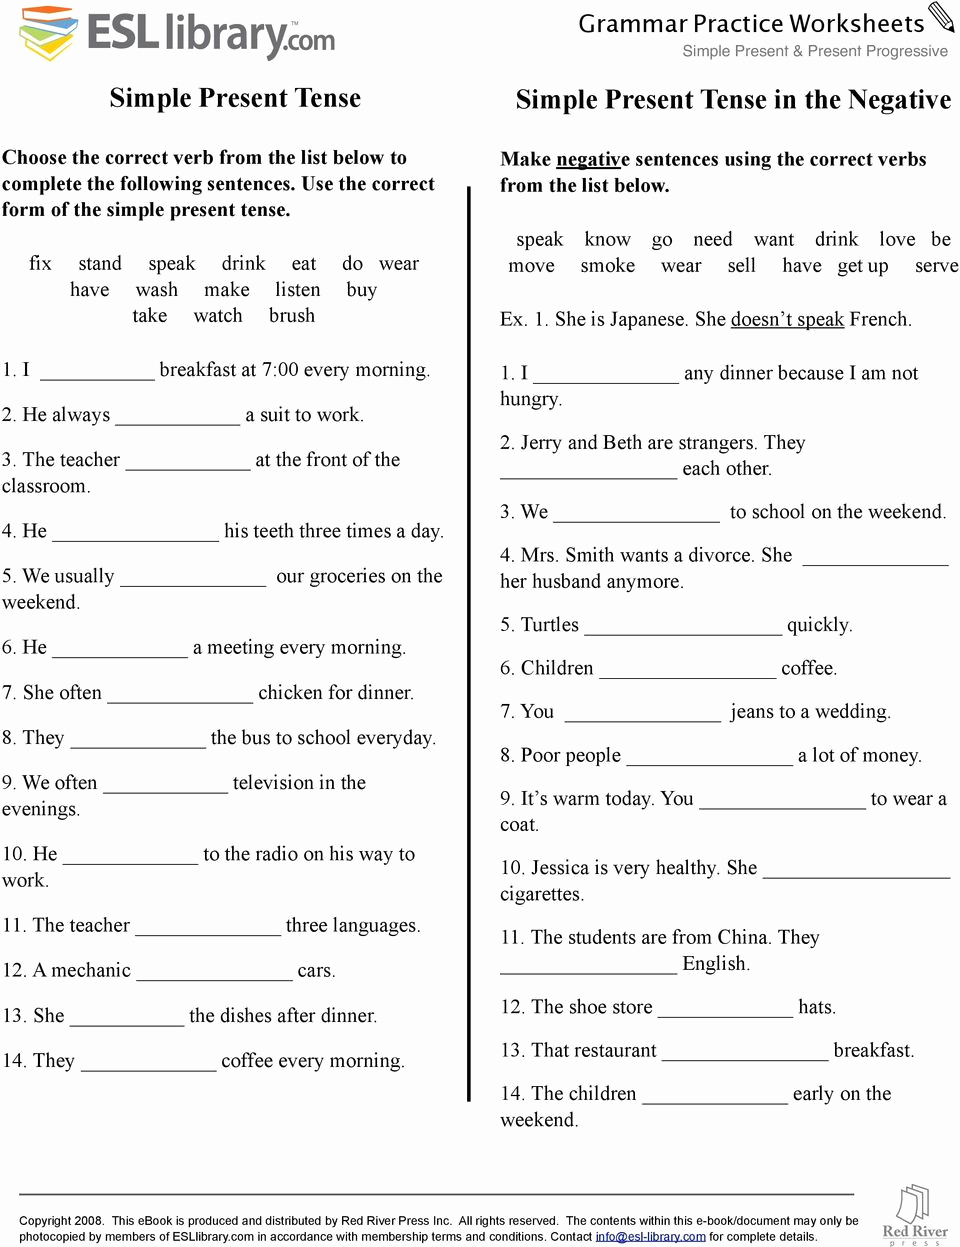 Verb Tense Worksheets Middle School New Verb Tense Worksheets Middle School – Worksheet From Home